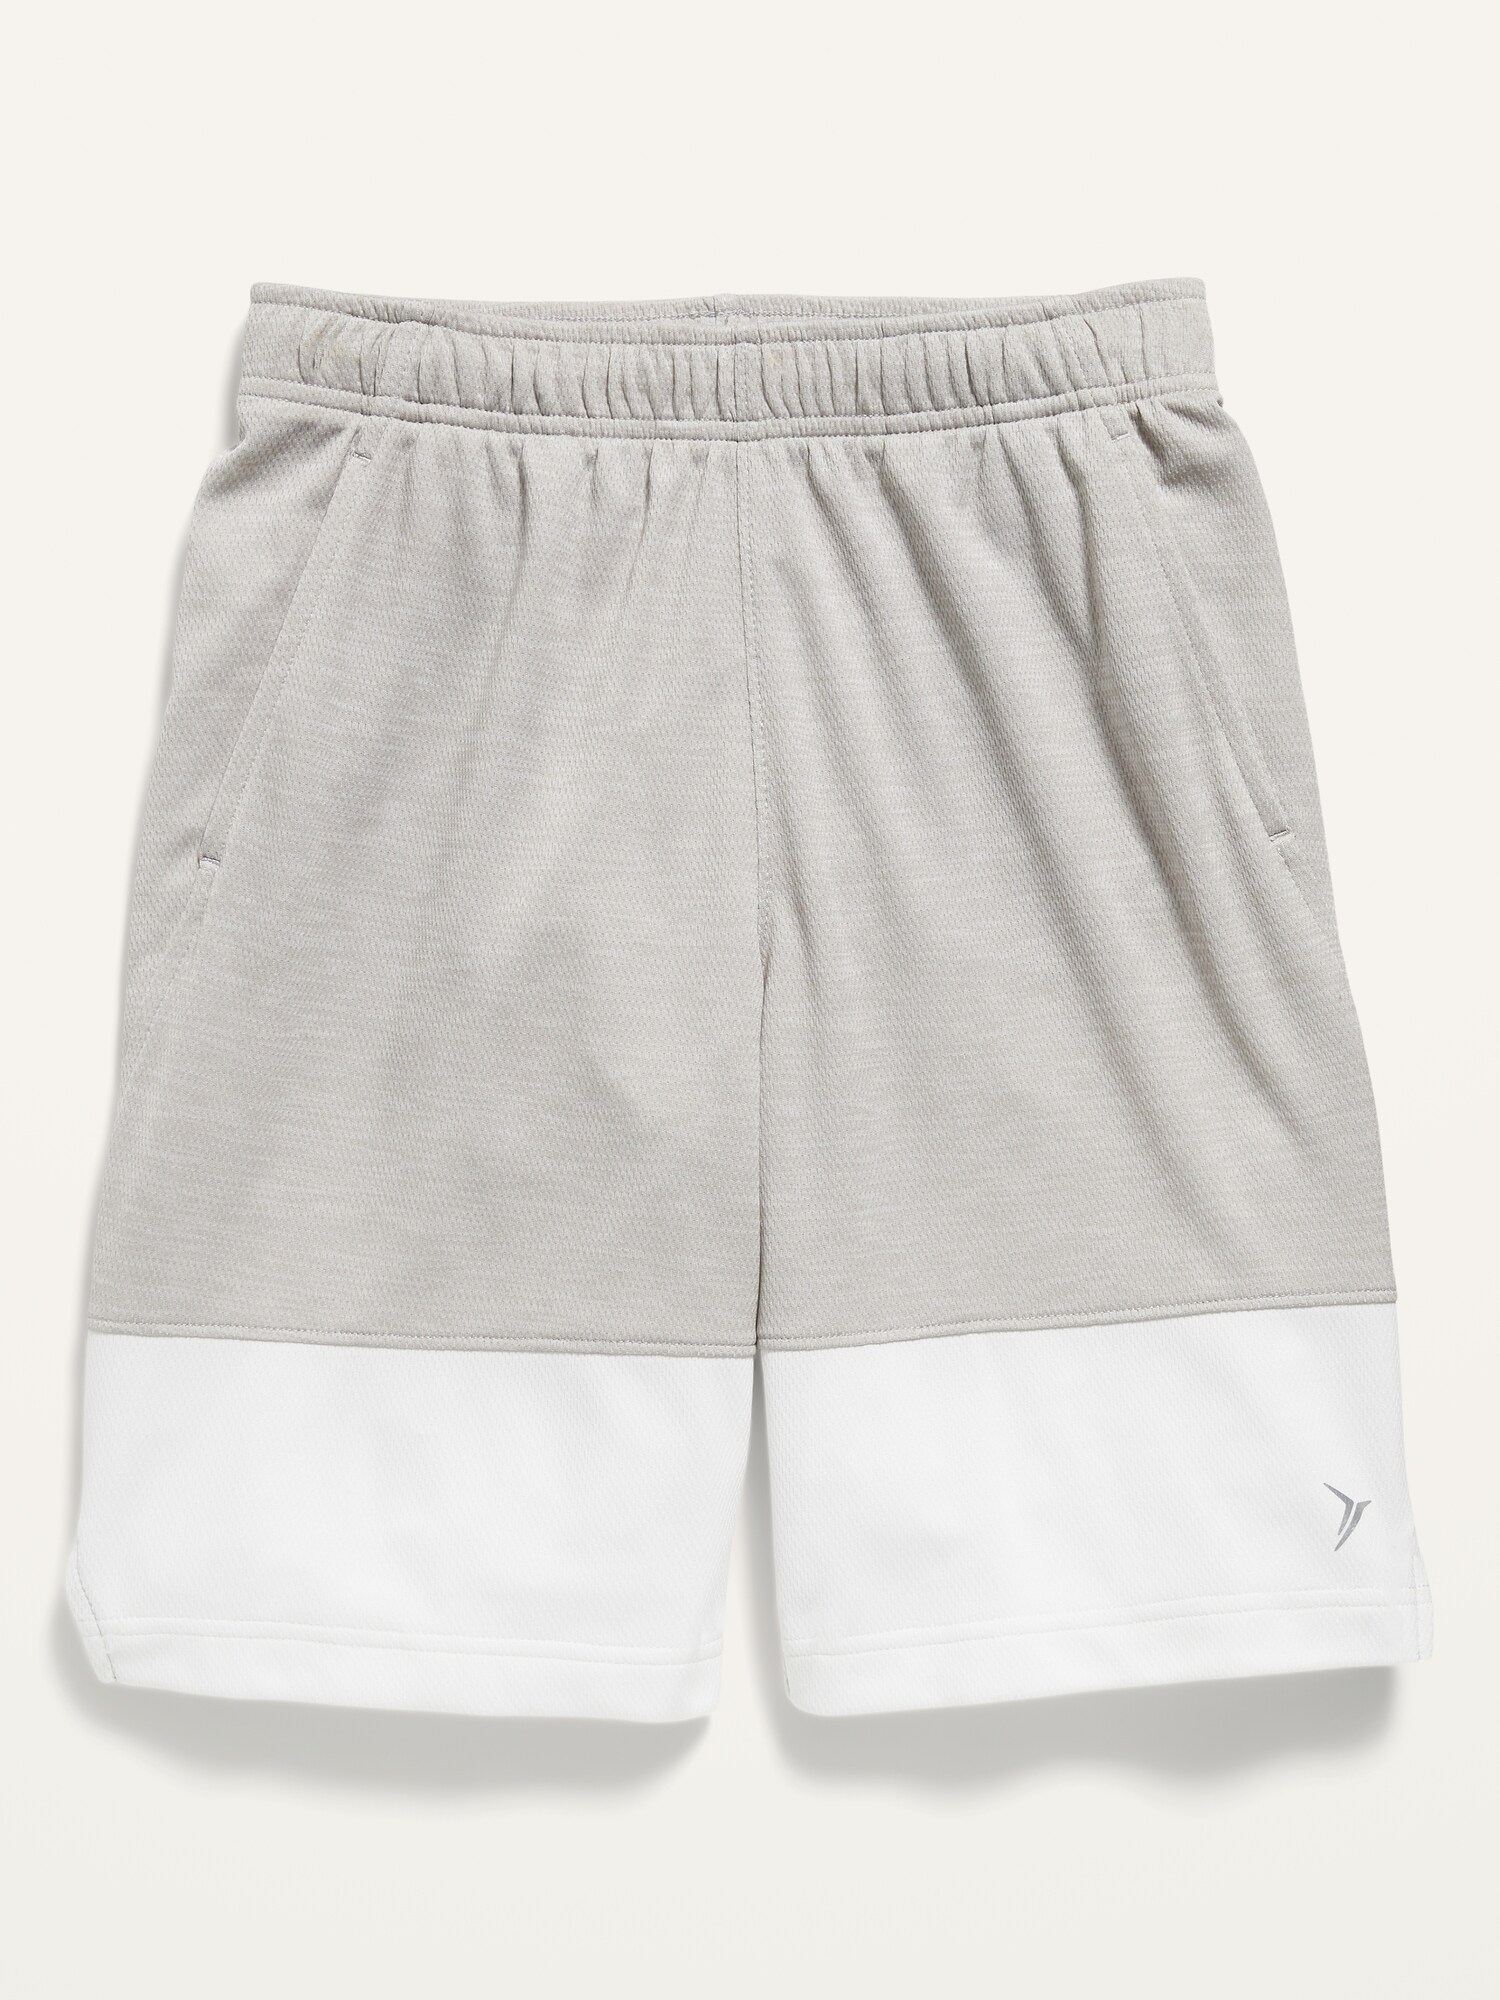 boys navy basketball shorts